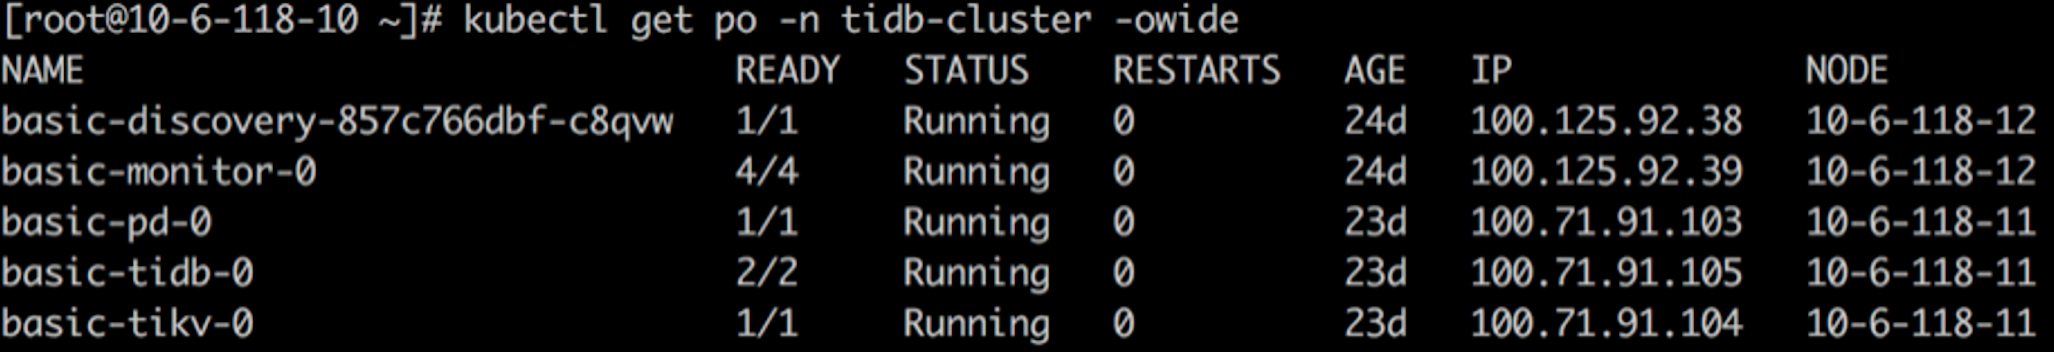 Deploy TiDB cluster